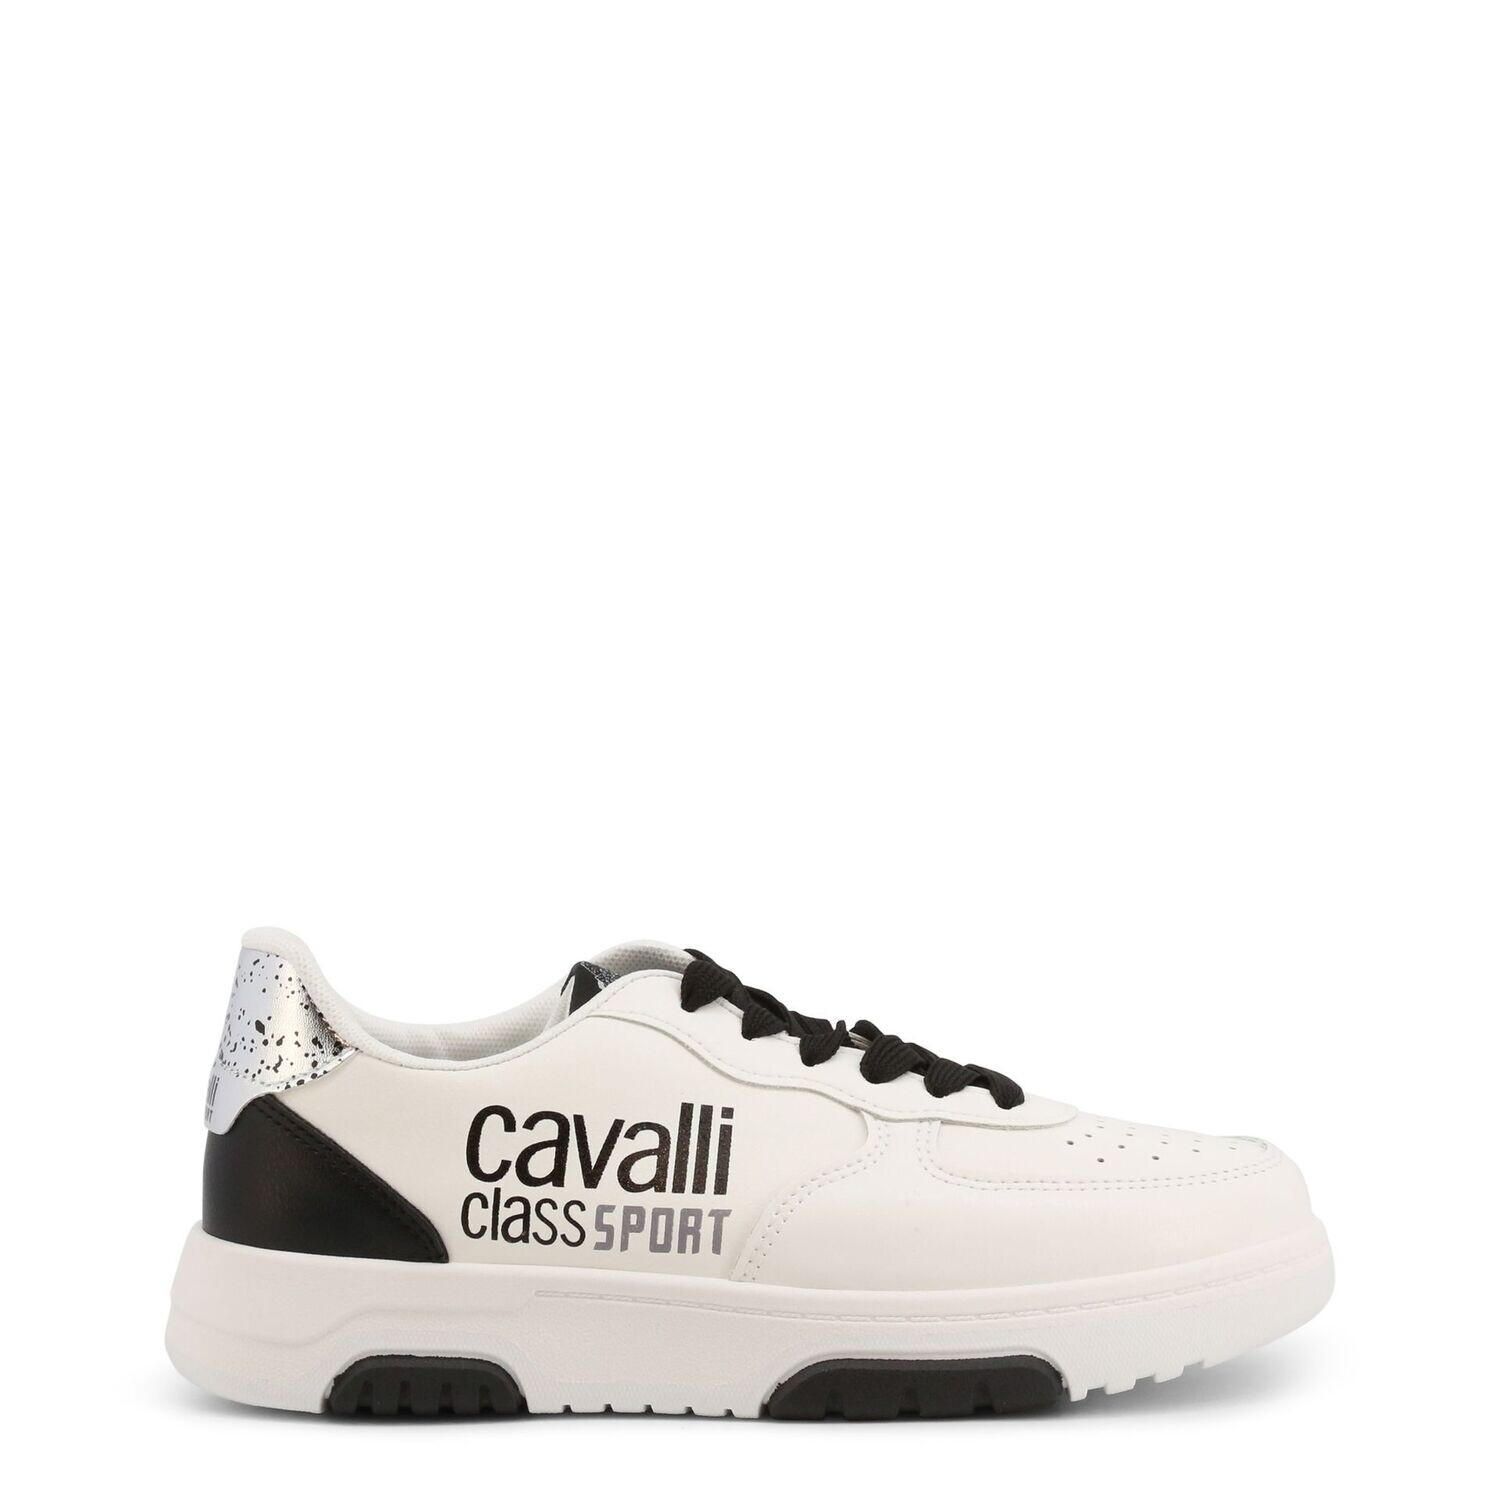 Cavalli Class White Trainers, size: EU 37